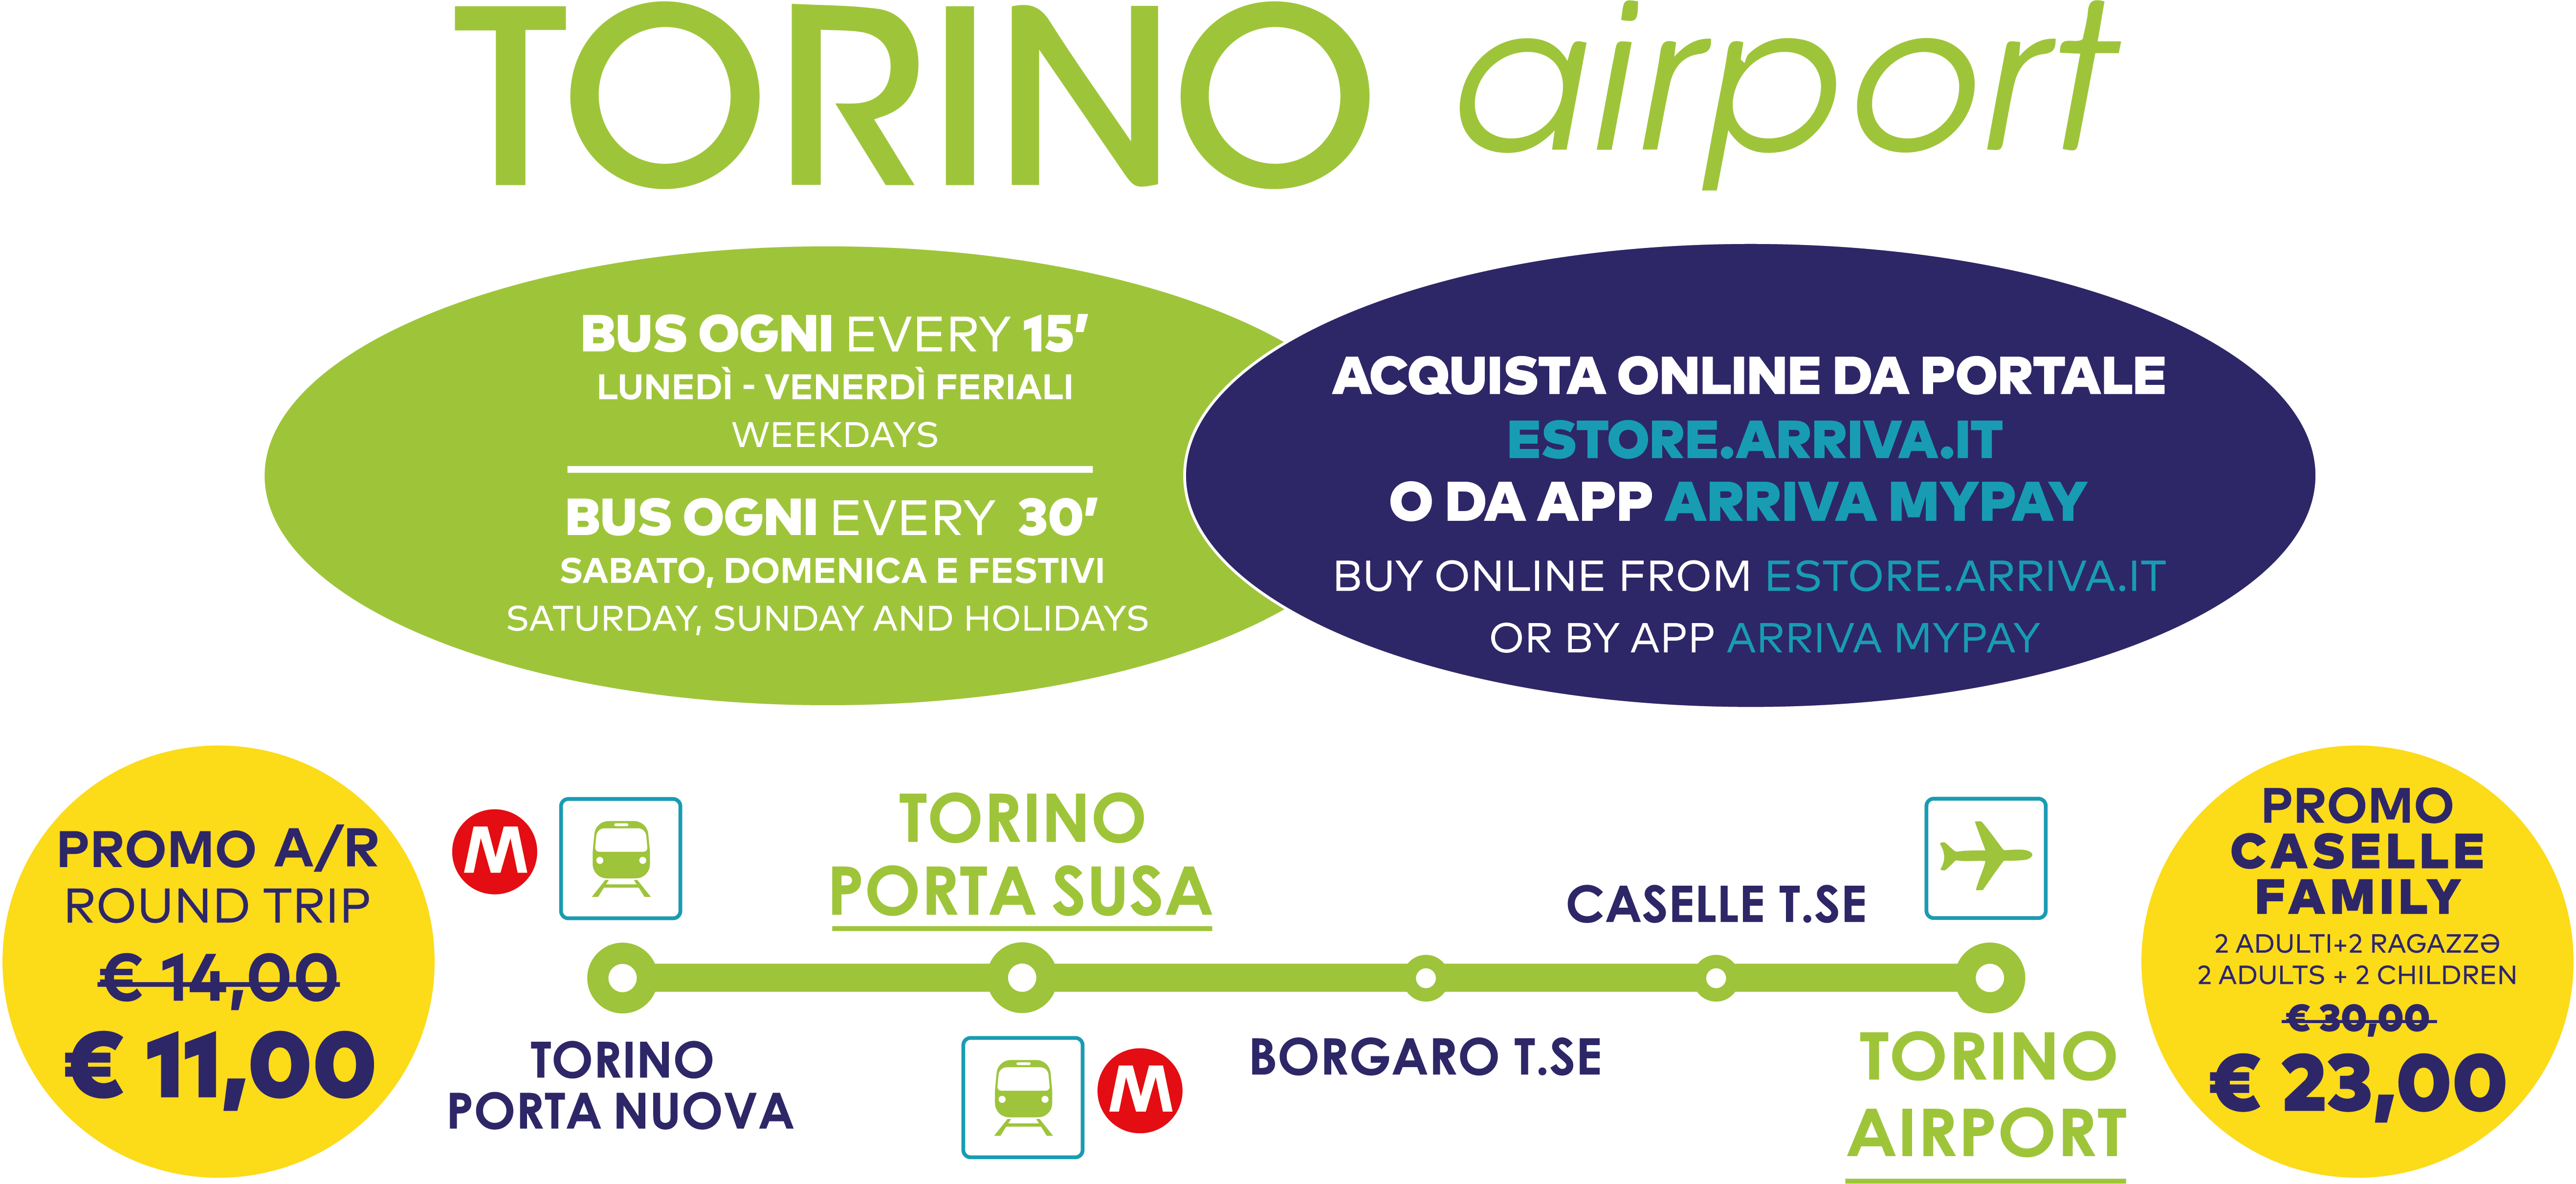 caselle-torino-airport